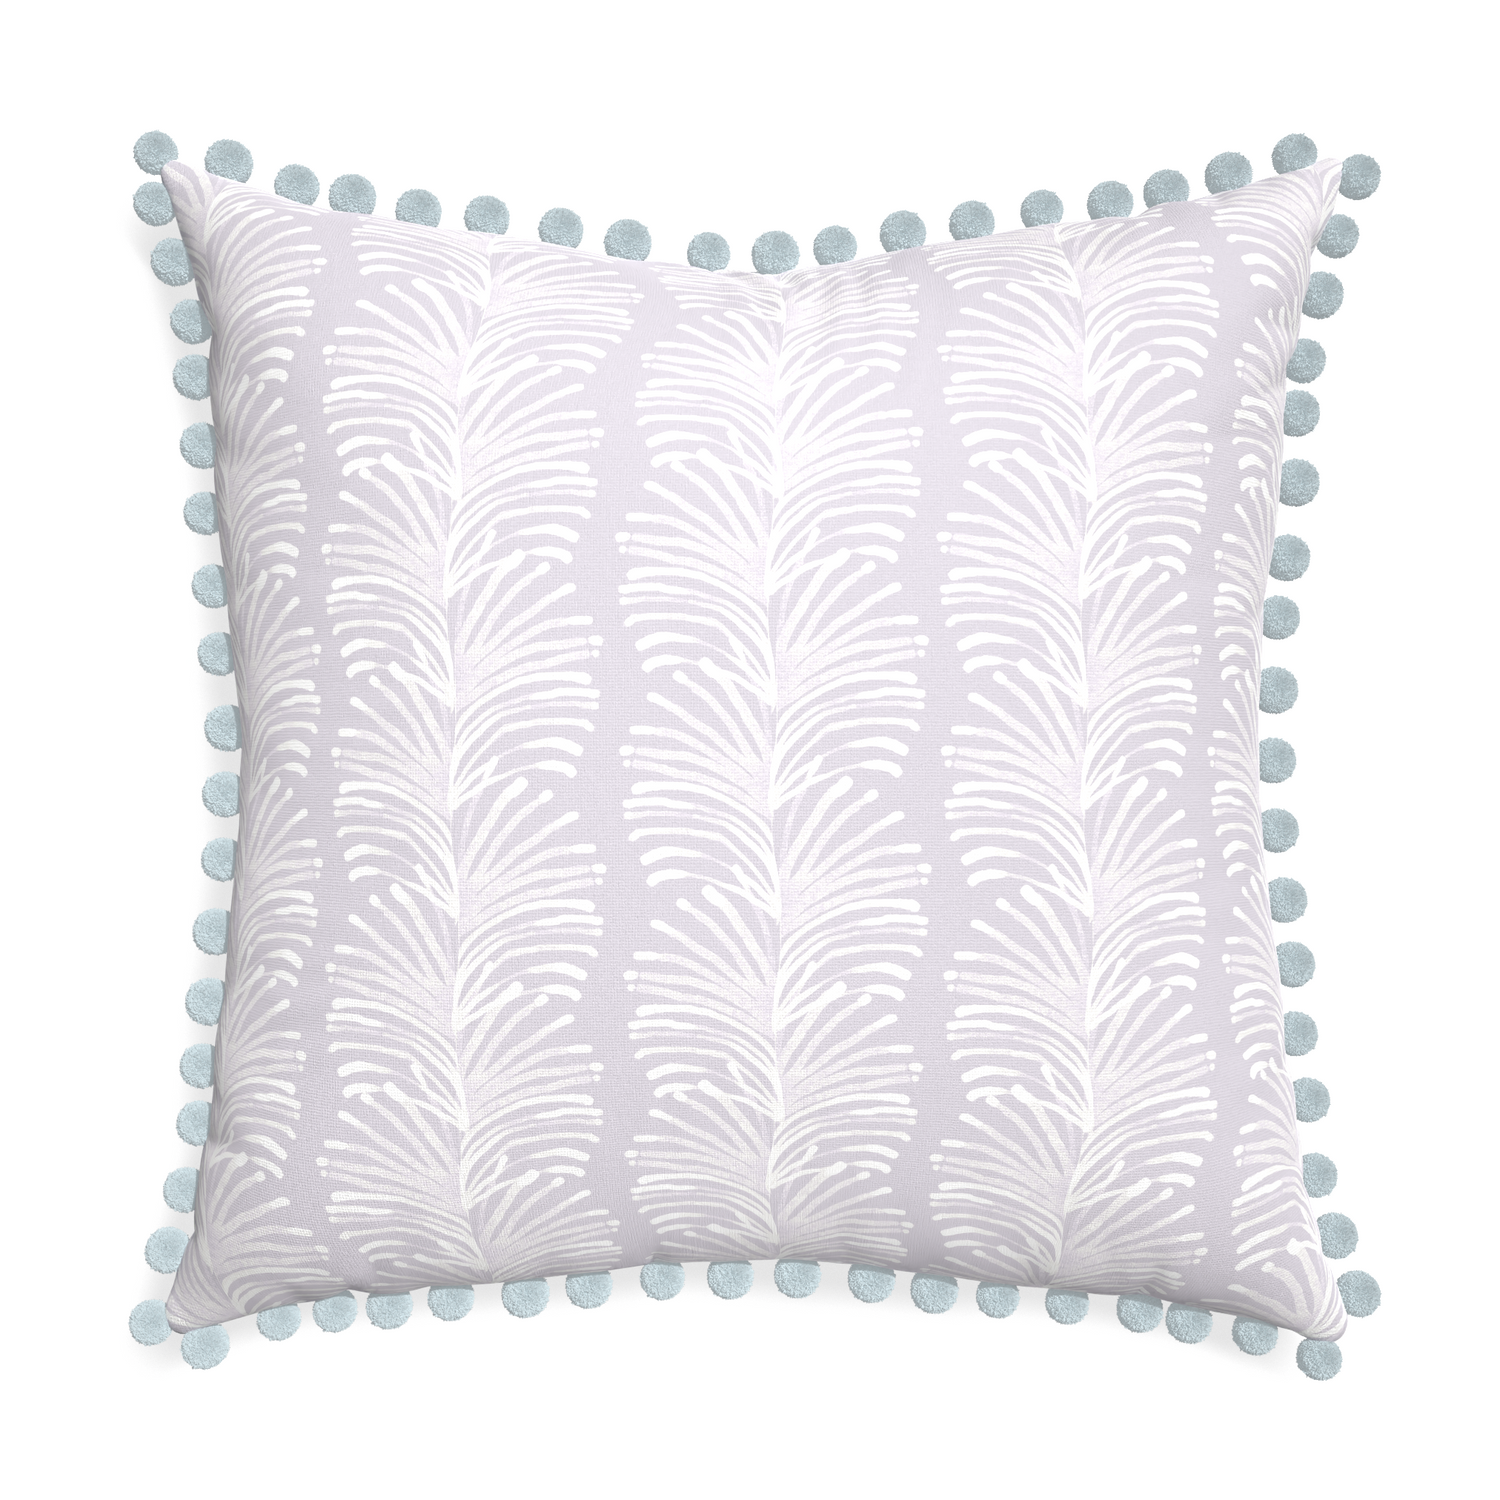 Euro-sham emma lavender custom pillow with powder pom pom on white background